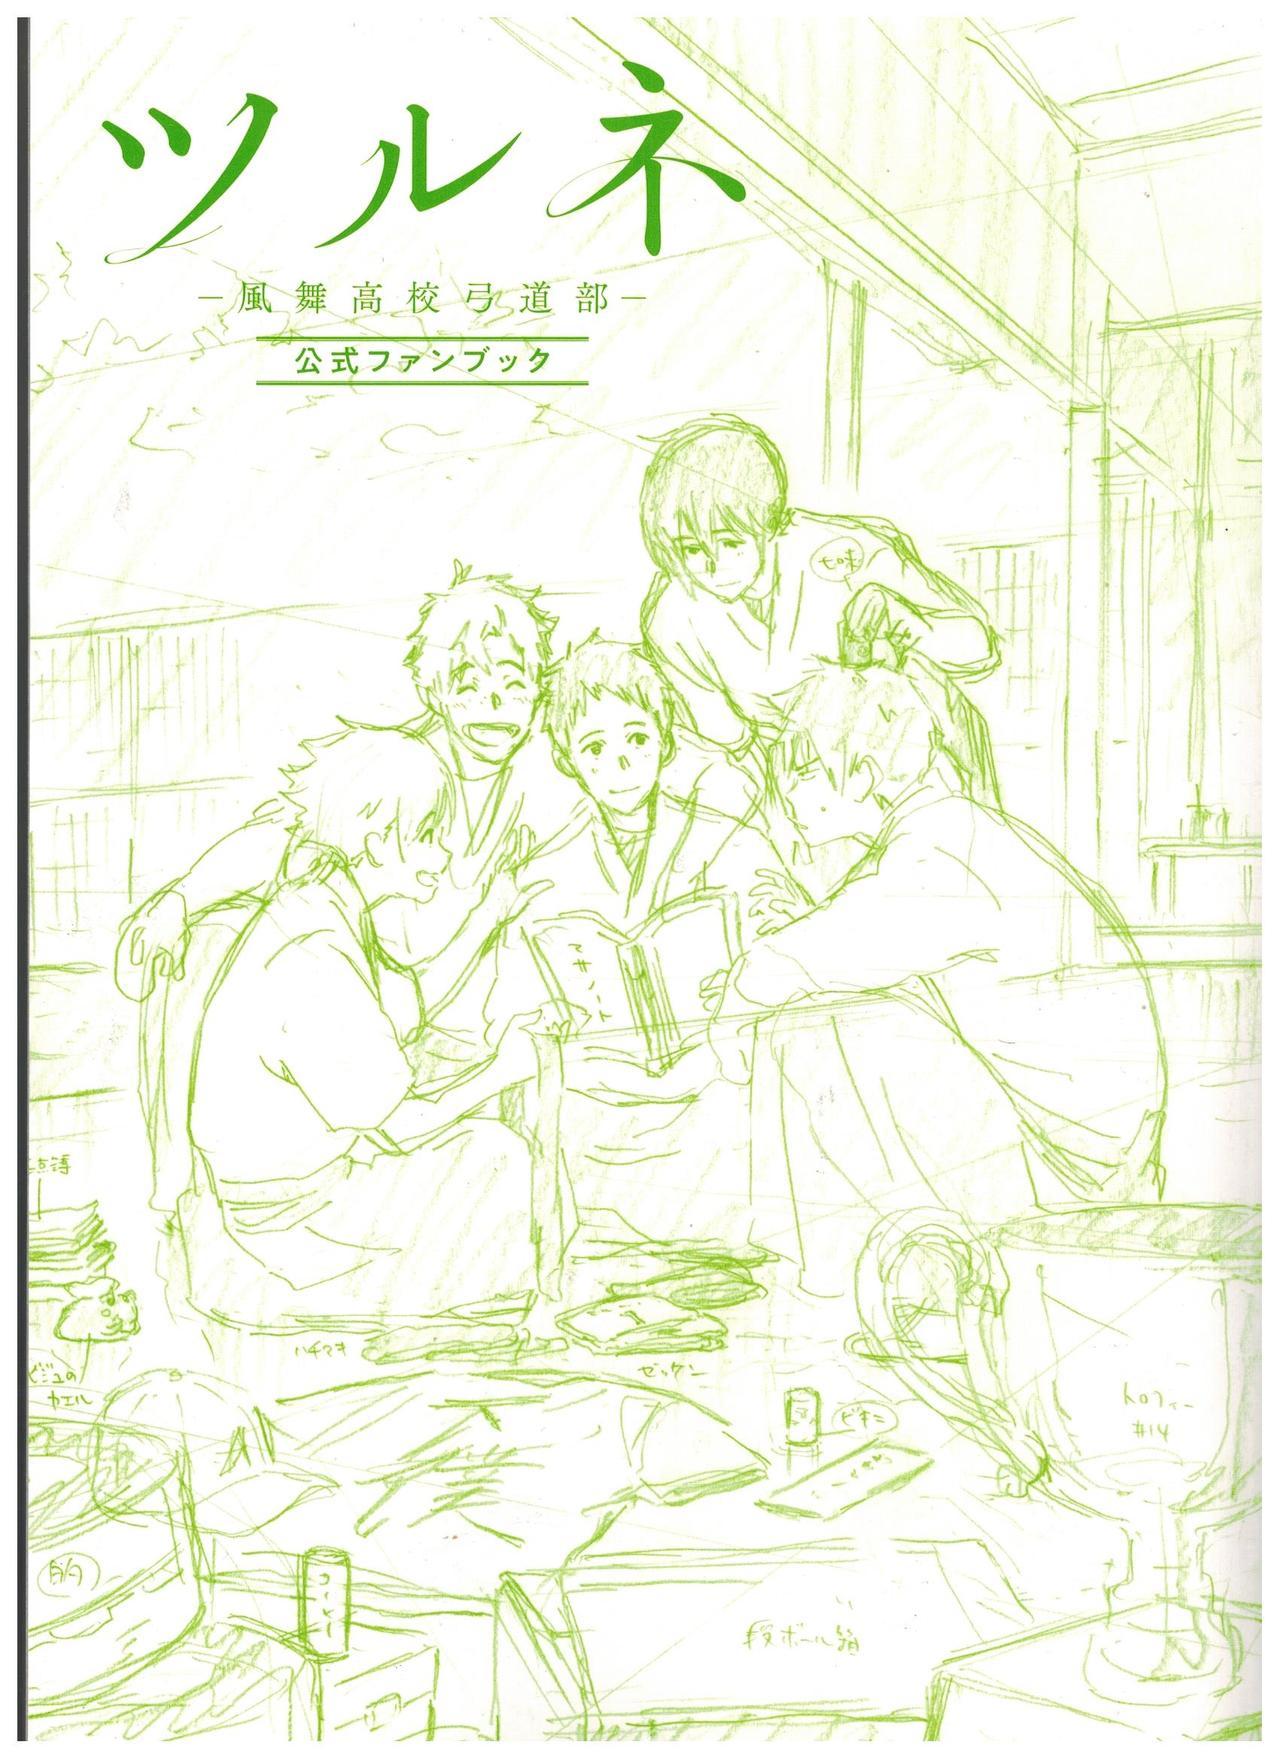 tsurune book 3!?!? — Tsurune Starter Book-Kisaragi Nanao